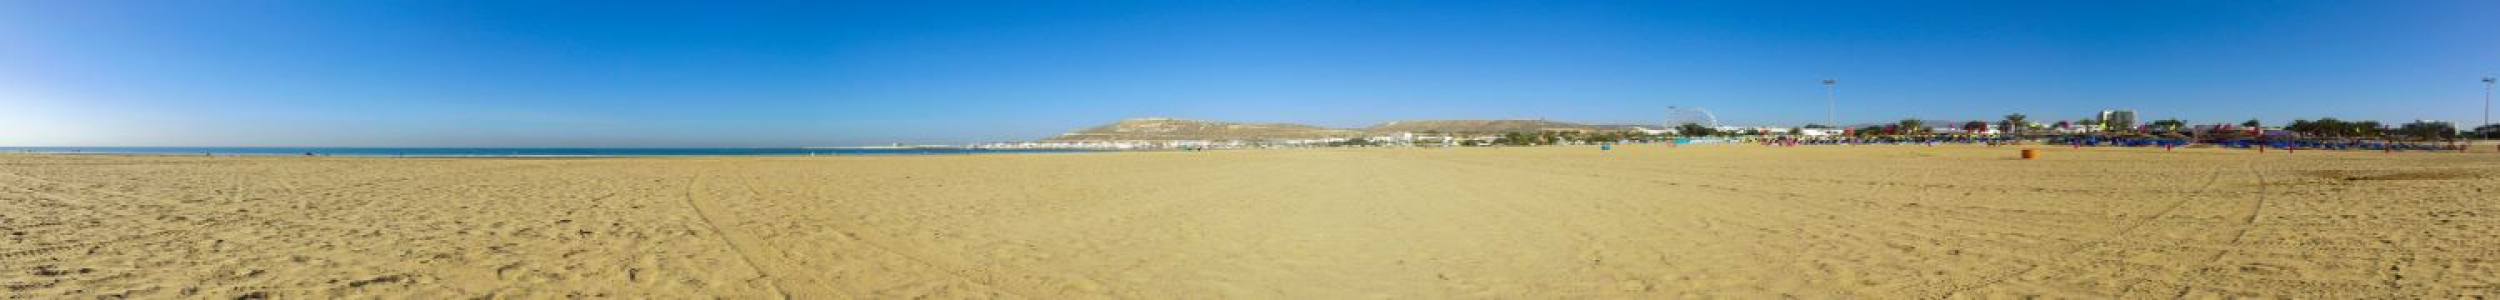 Agadir : week-end 5j/4n en hôtel front de mer + petits-déjeuners + vols